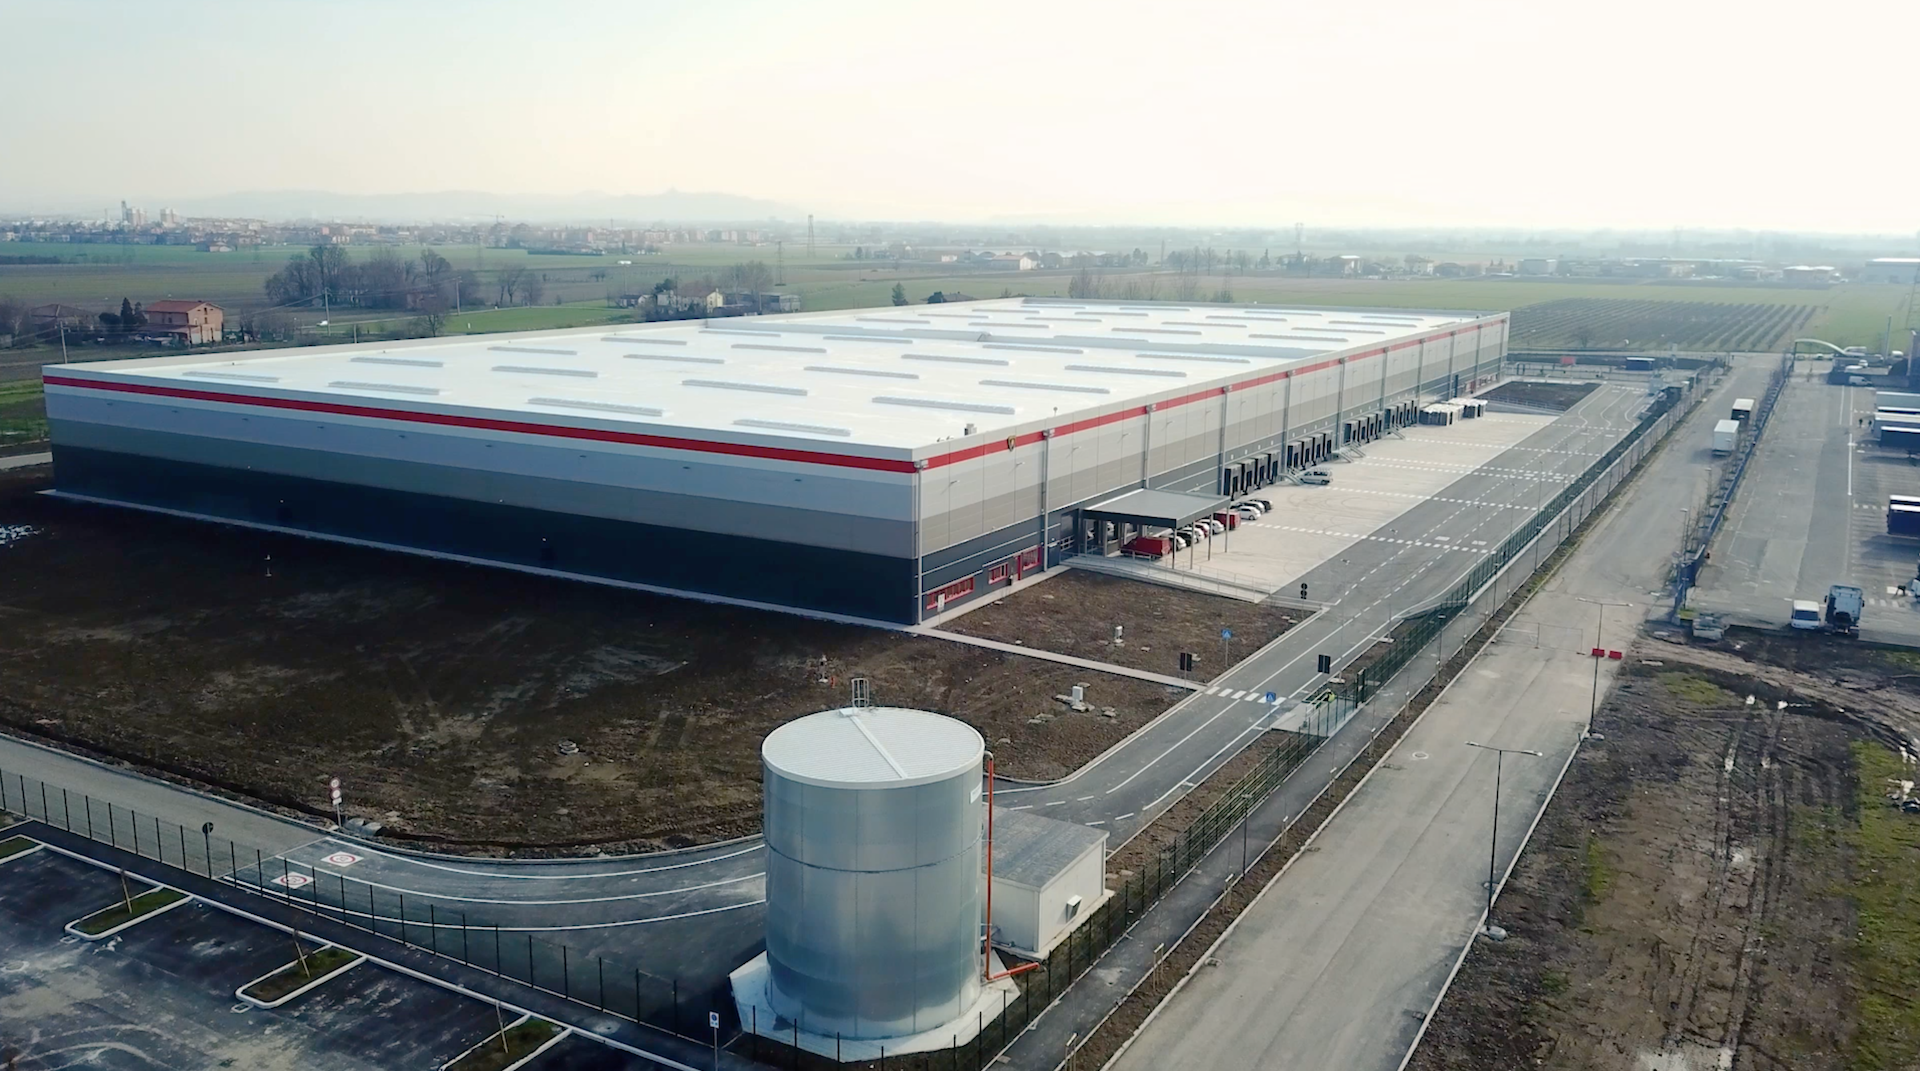 Ducati and Lamborghini already operating in their new 30,000 square meter logistics hub.